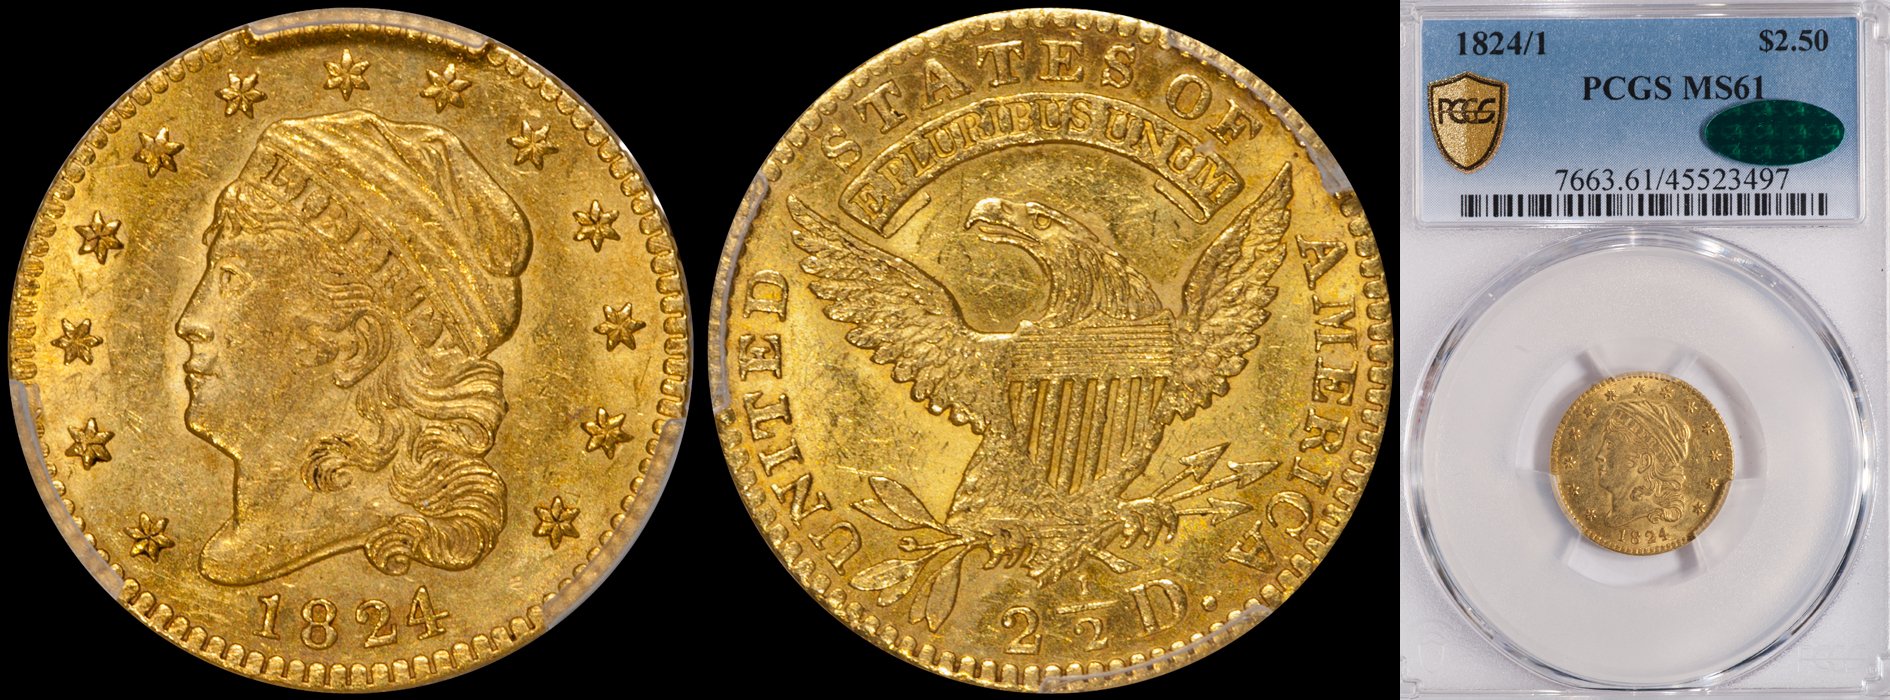 1902 AU 53 Morgan Silver One Dollar Coin $1 NGC Free Shipping